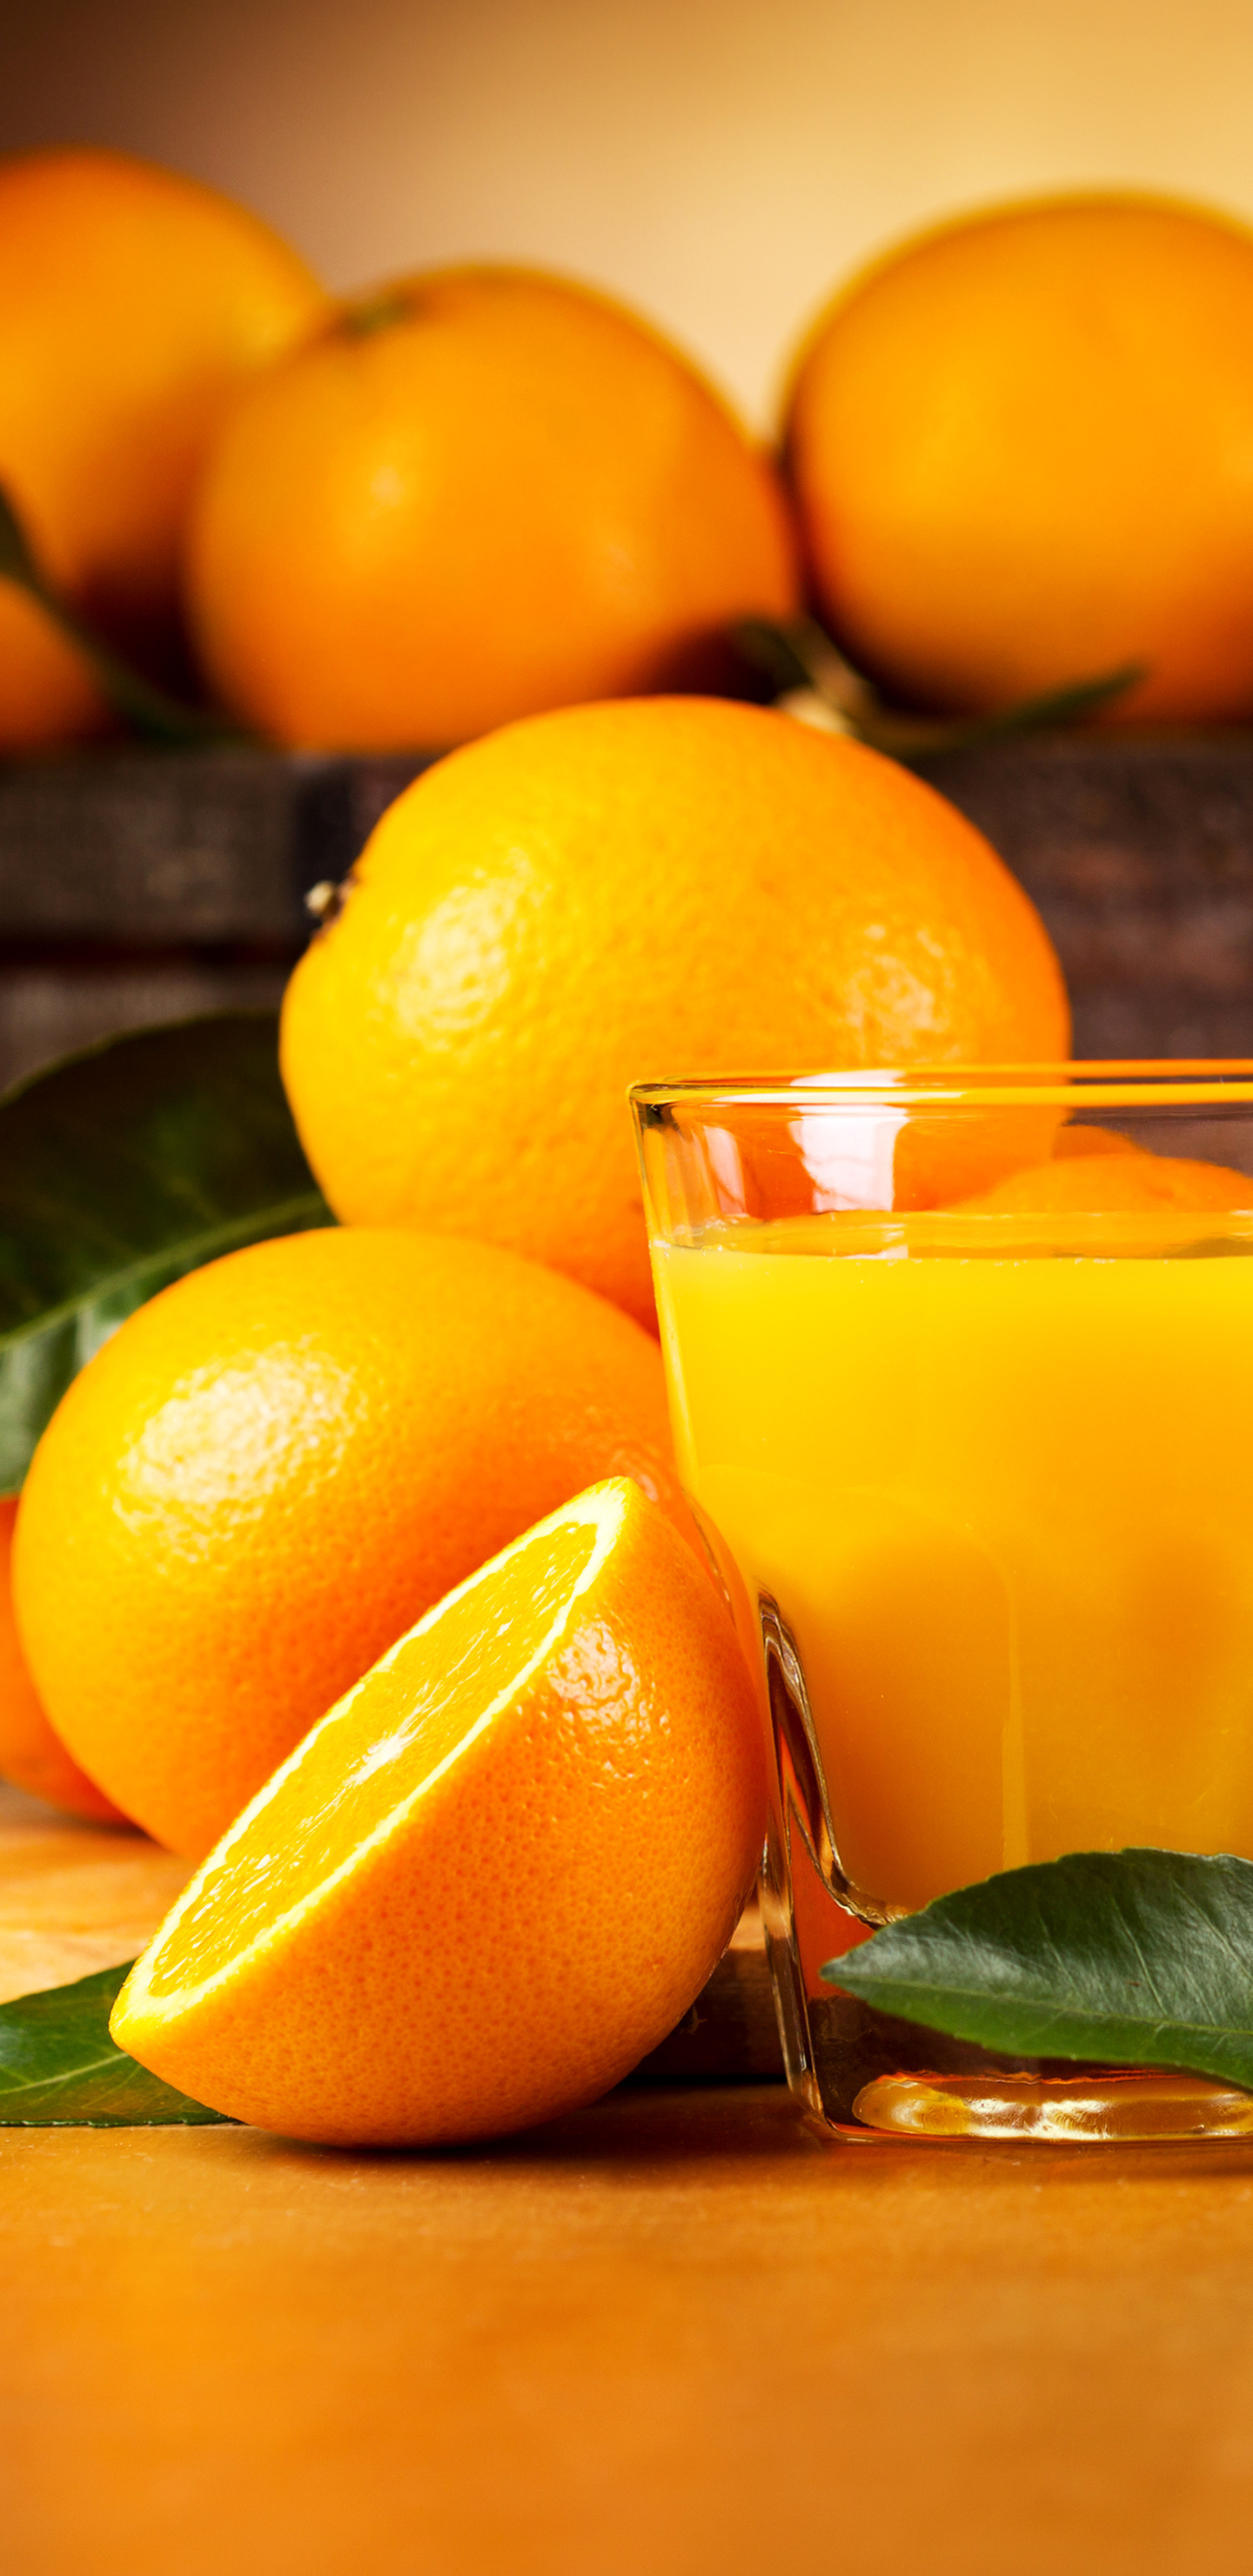 1145607 baixar imagens comida, laranja, cor laranja), suco, fruta, bebida, beber, fruta laranja), frutas - papéis de parede e protetores de tela gratuitamente